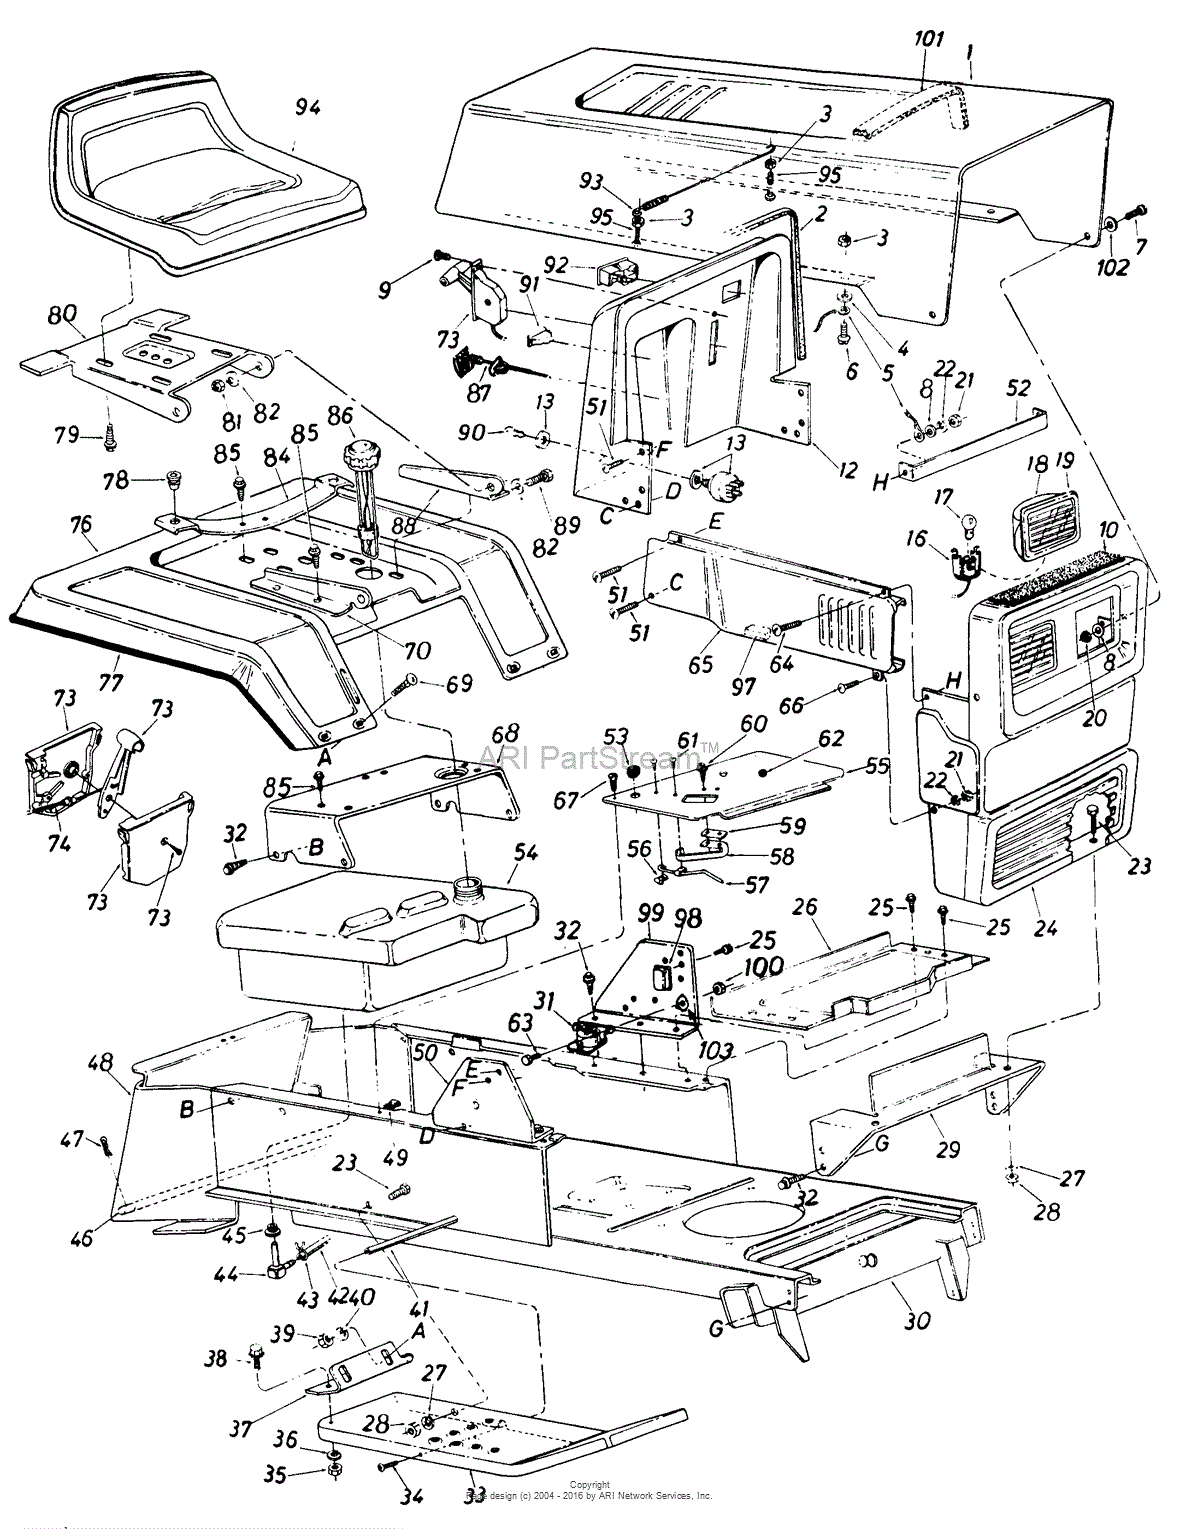 34 Mtd Lawn Tractor Parts Diagram